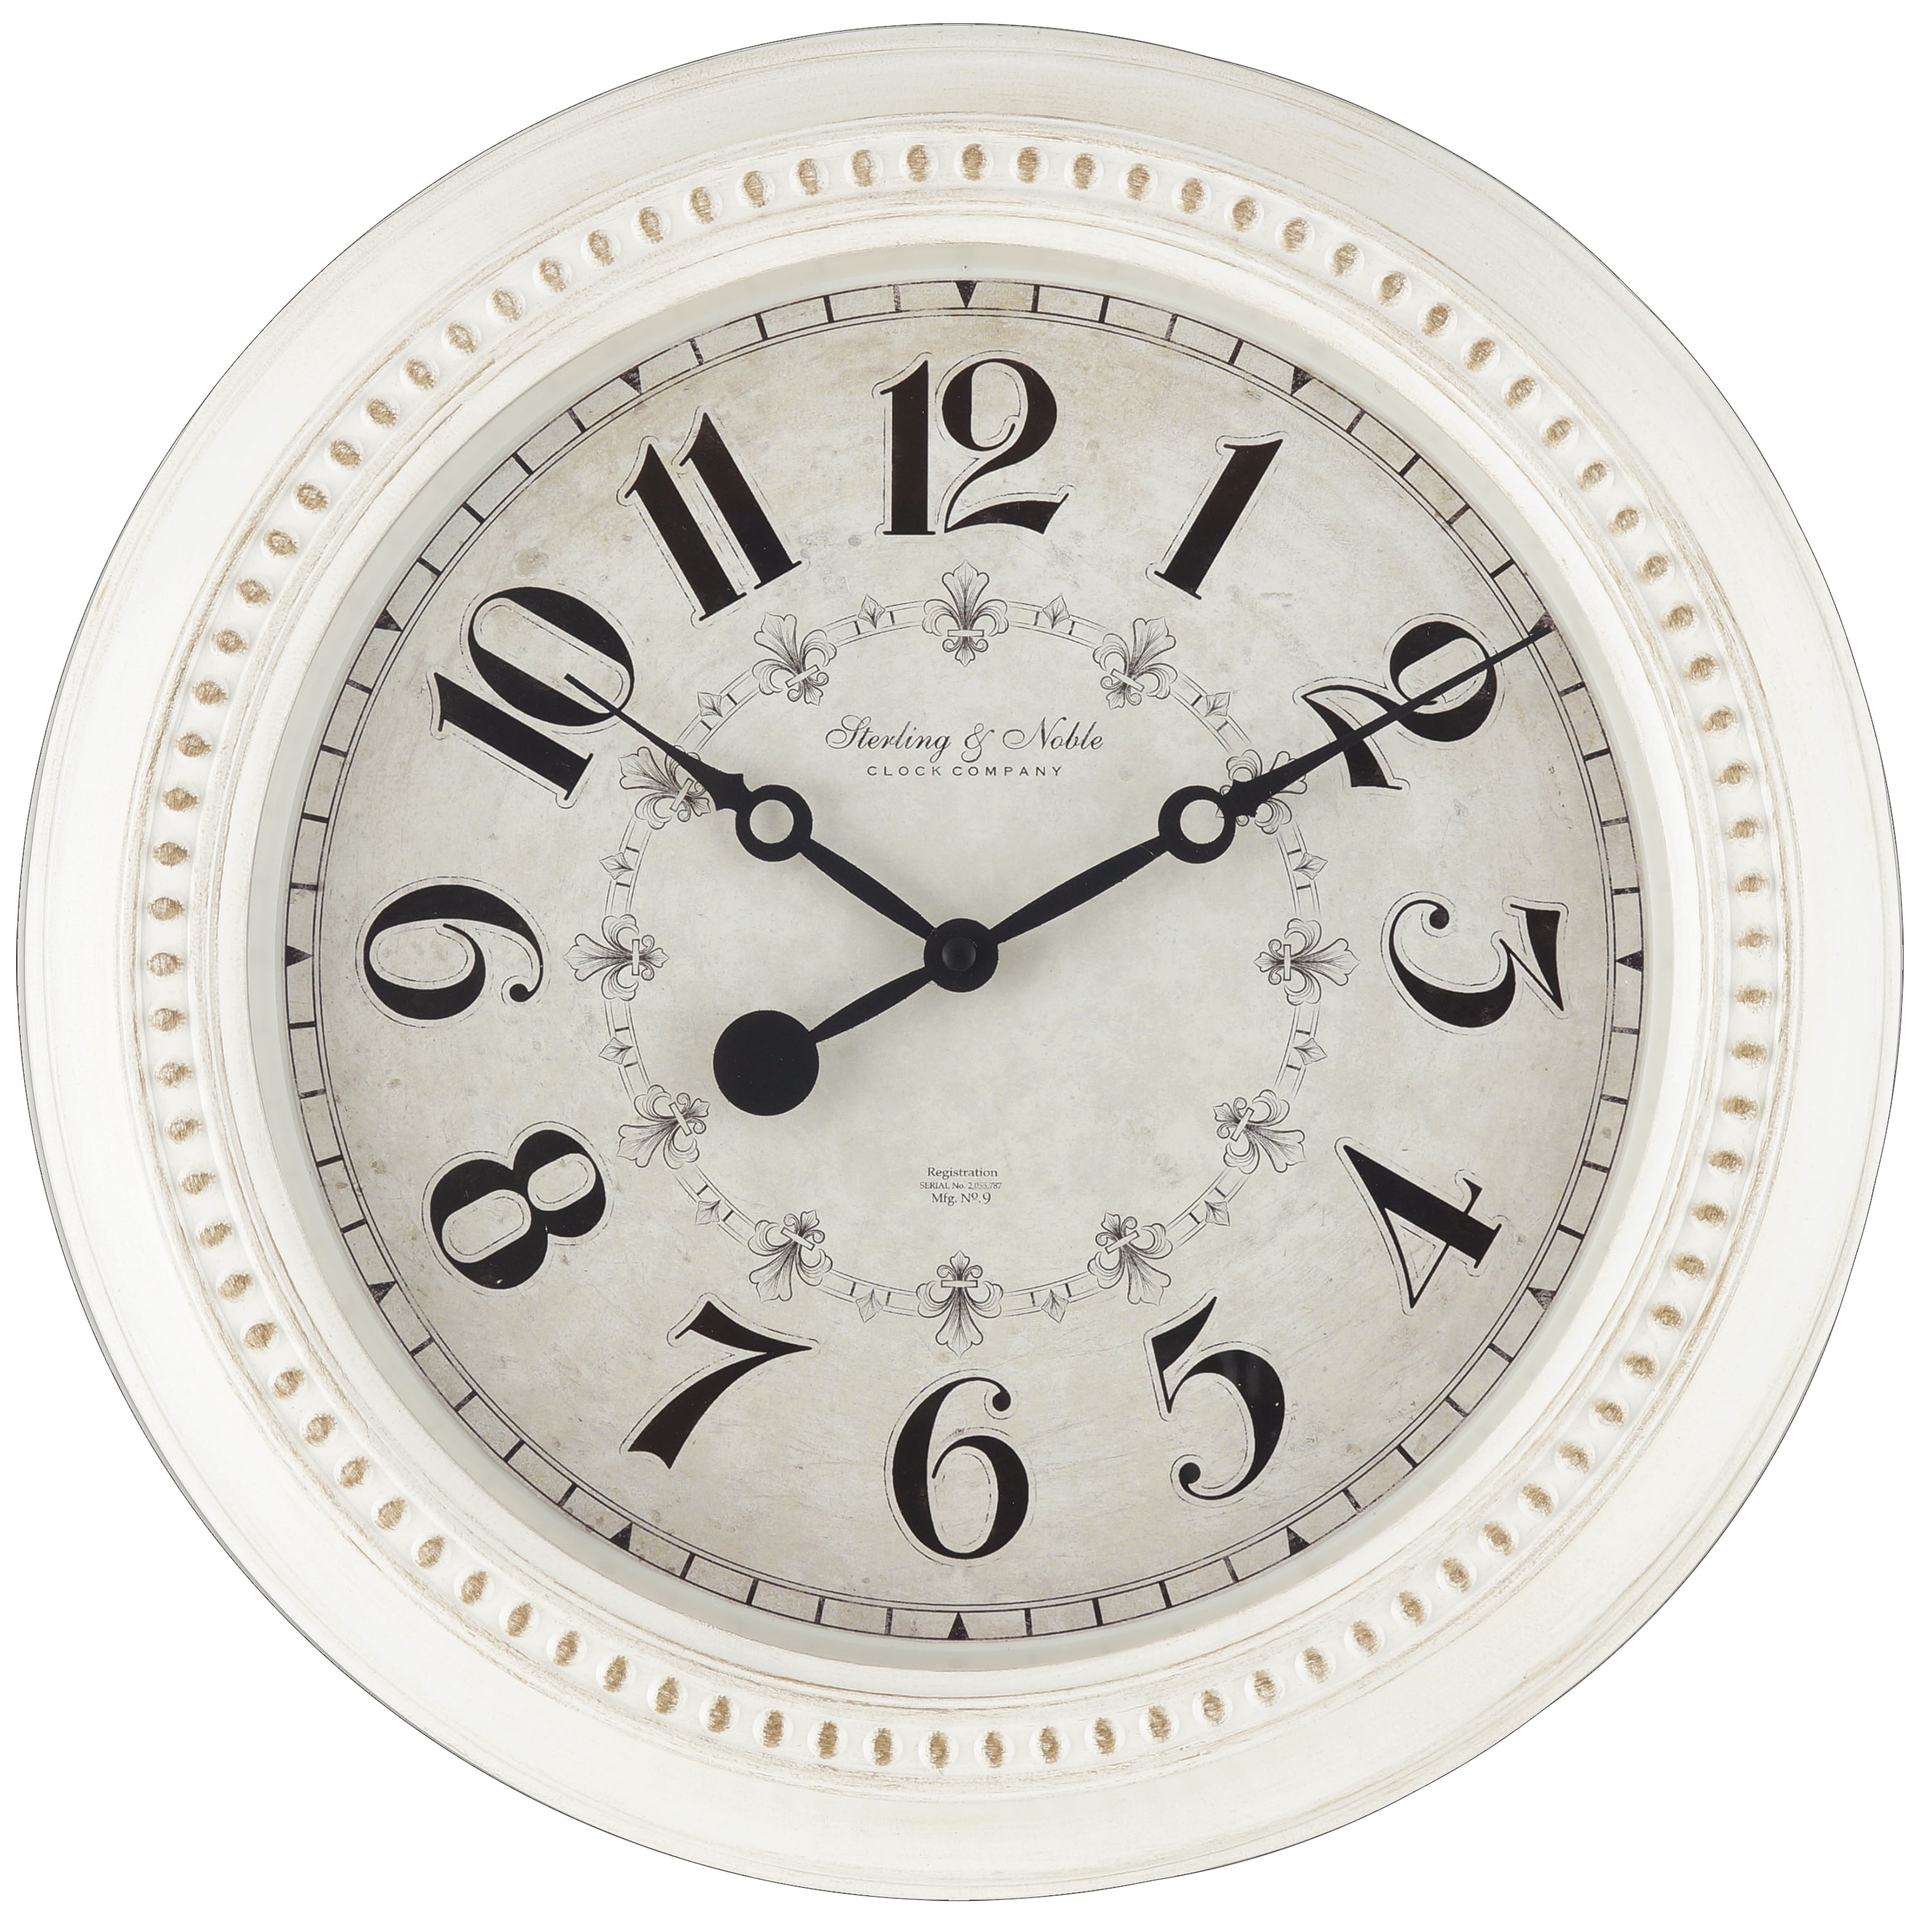 Antique Mantle Clock 6" Suspension Spring Rod set of 25 